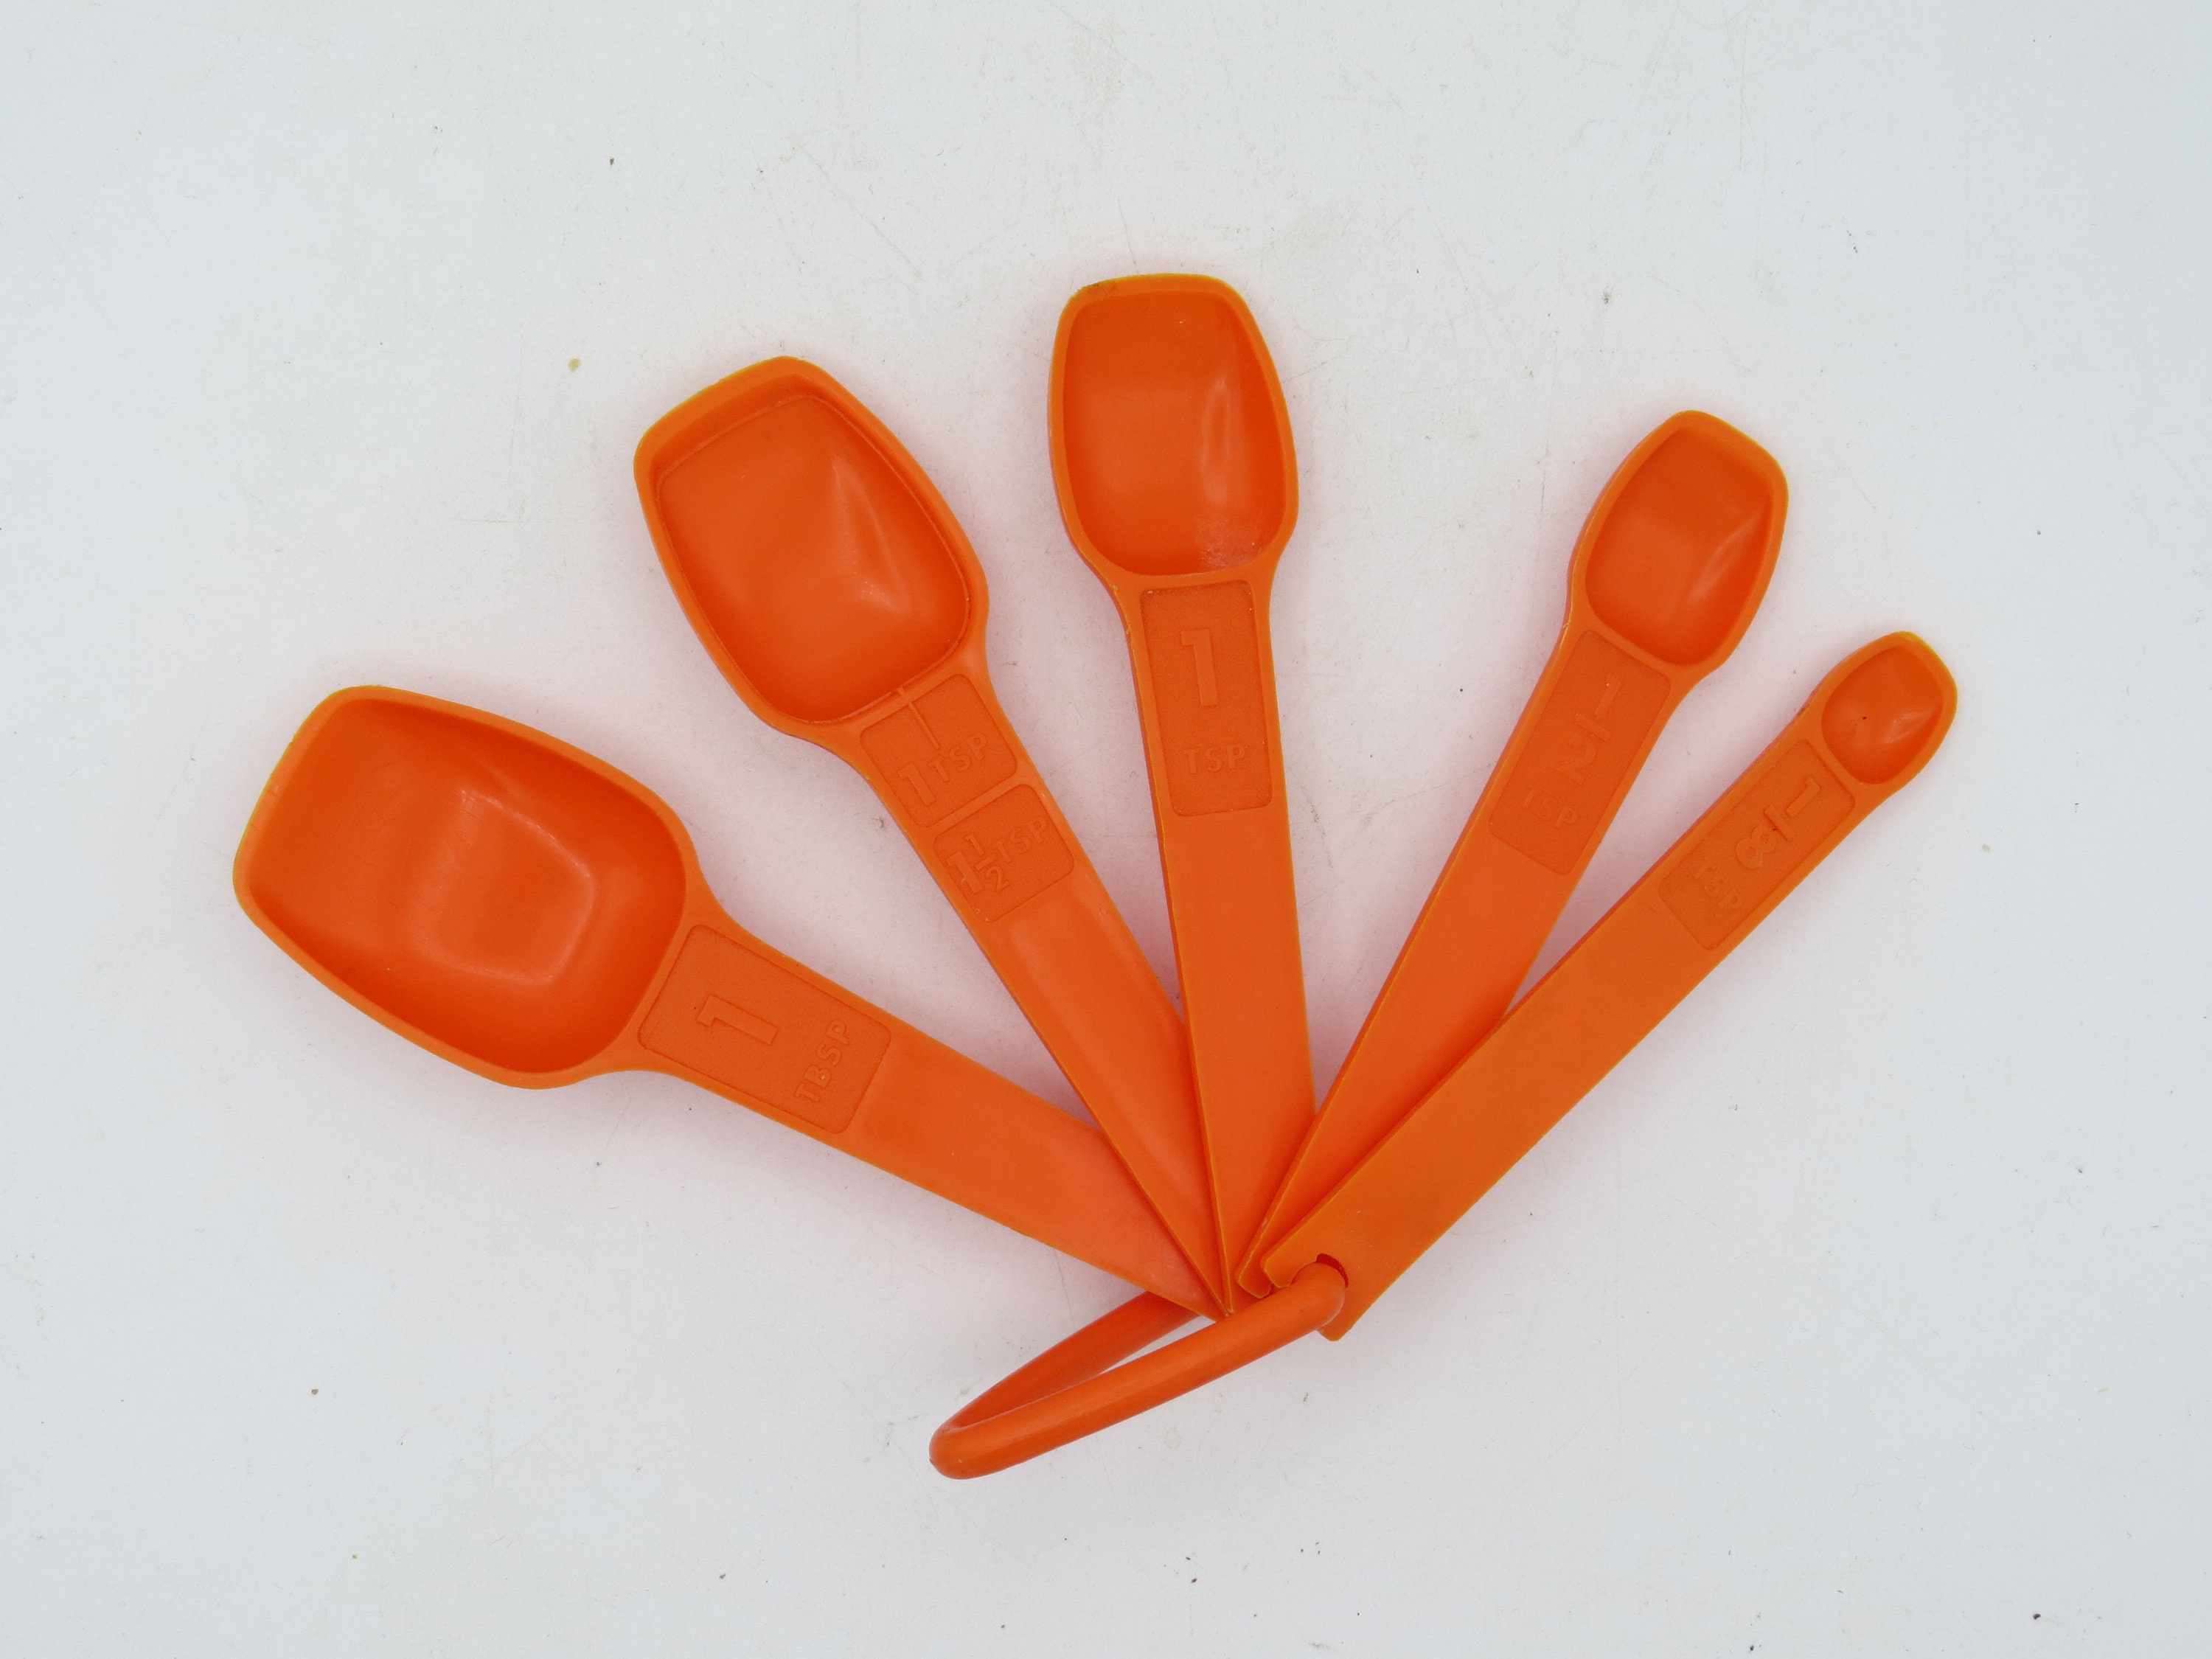 Vintage Orange Tupperware Plastic Measuring Spoons Set. US 